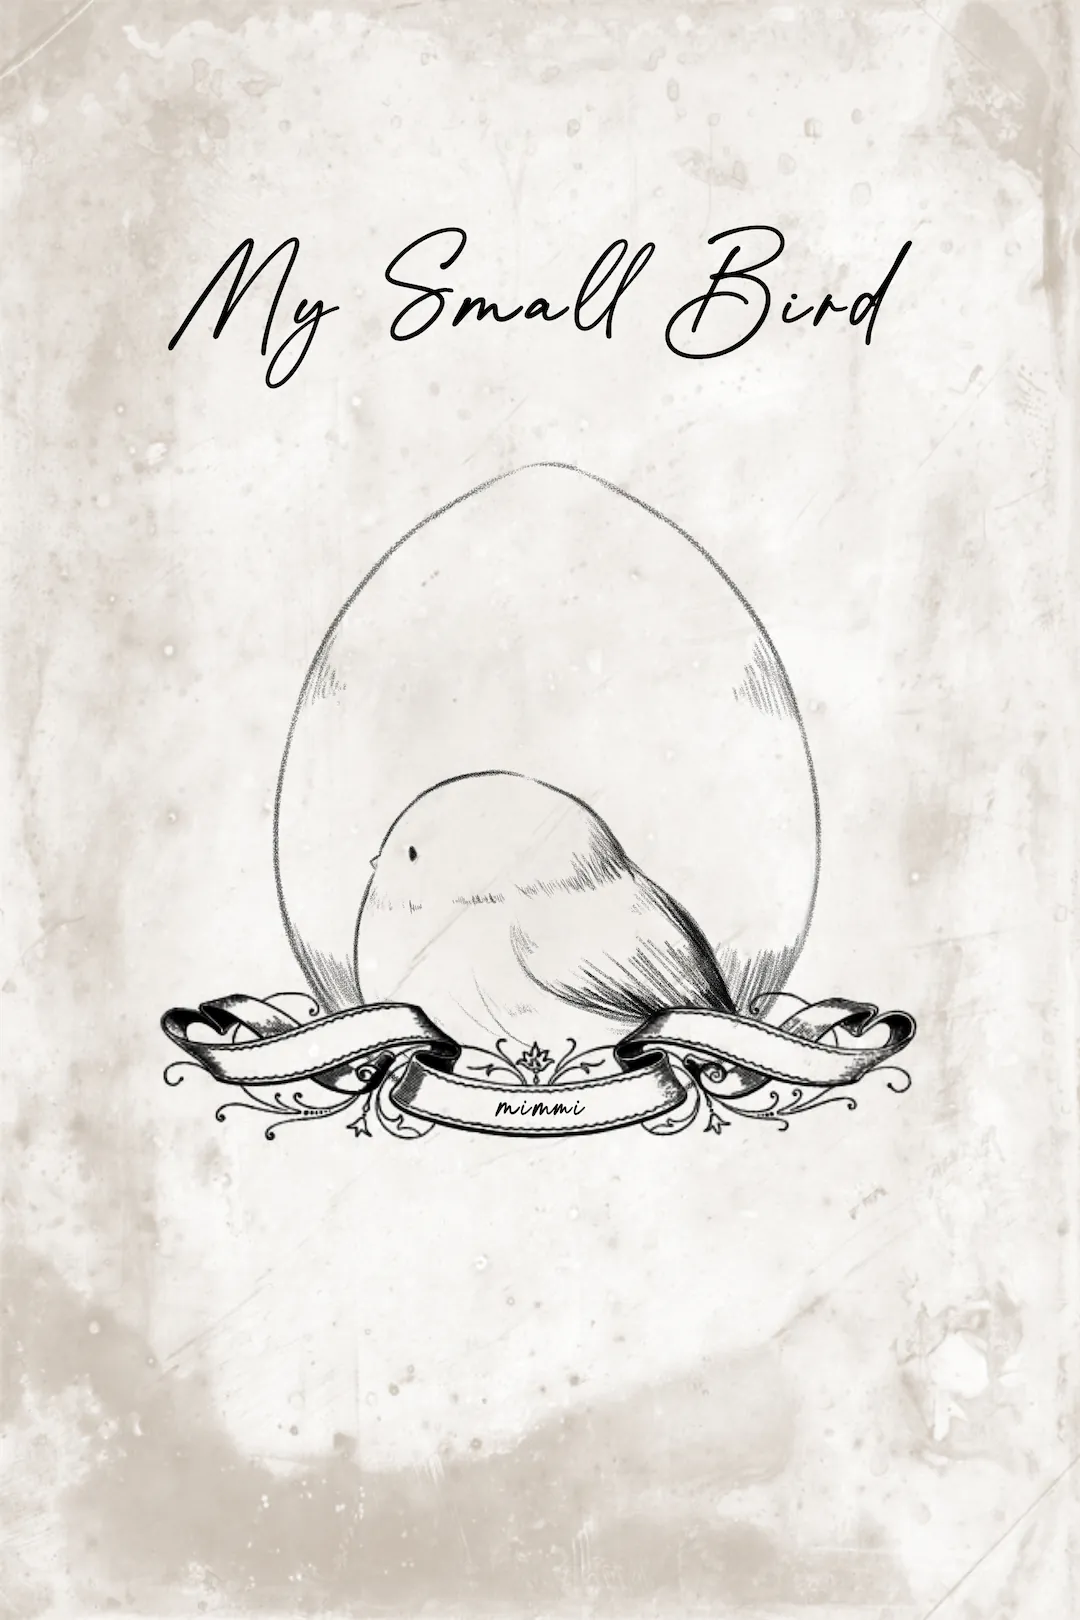 Mimmi-Vol.2-My-Small-Bird-coszip.com-001